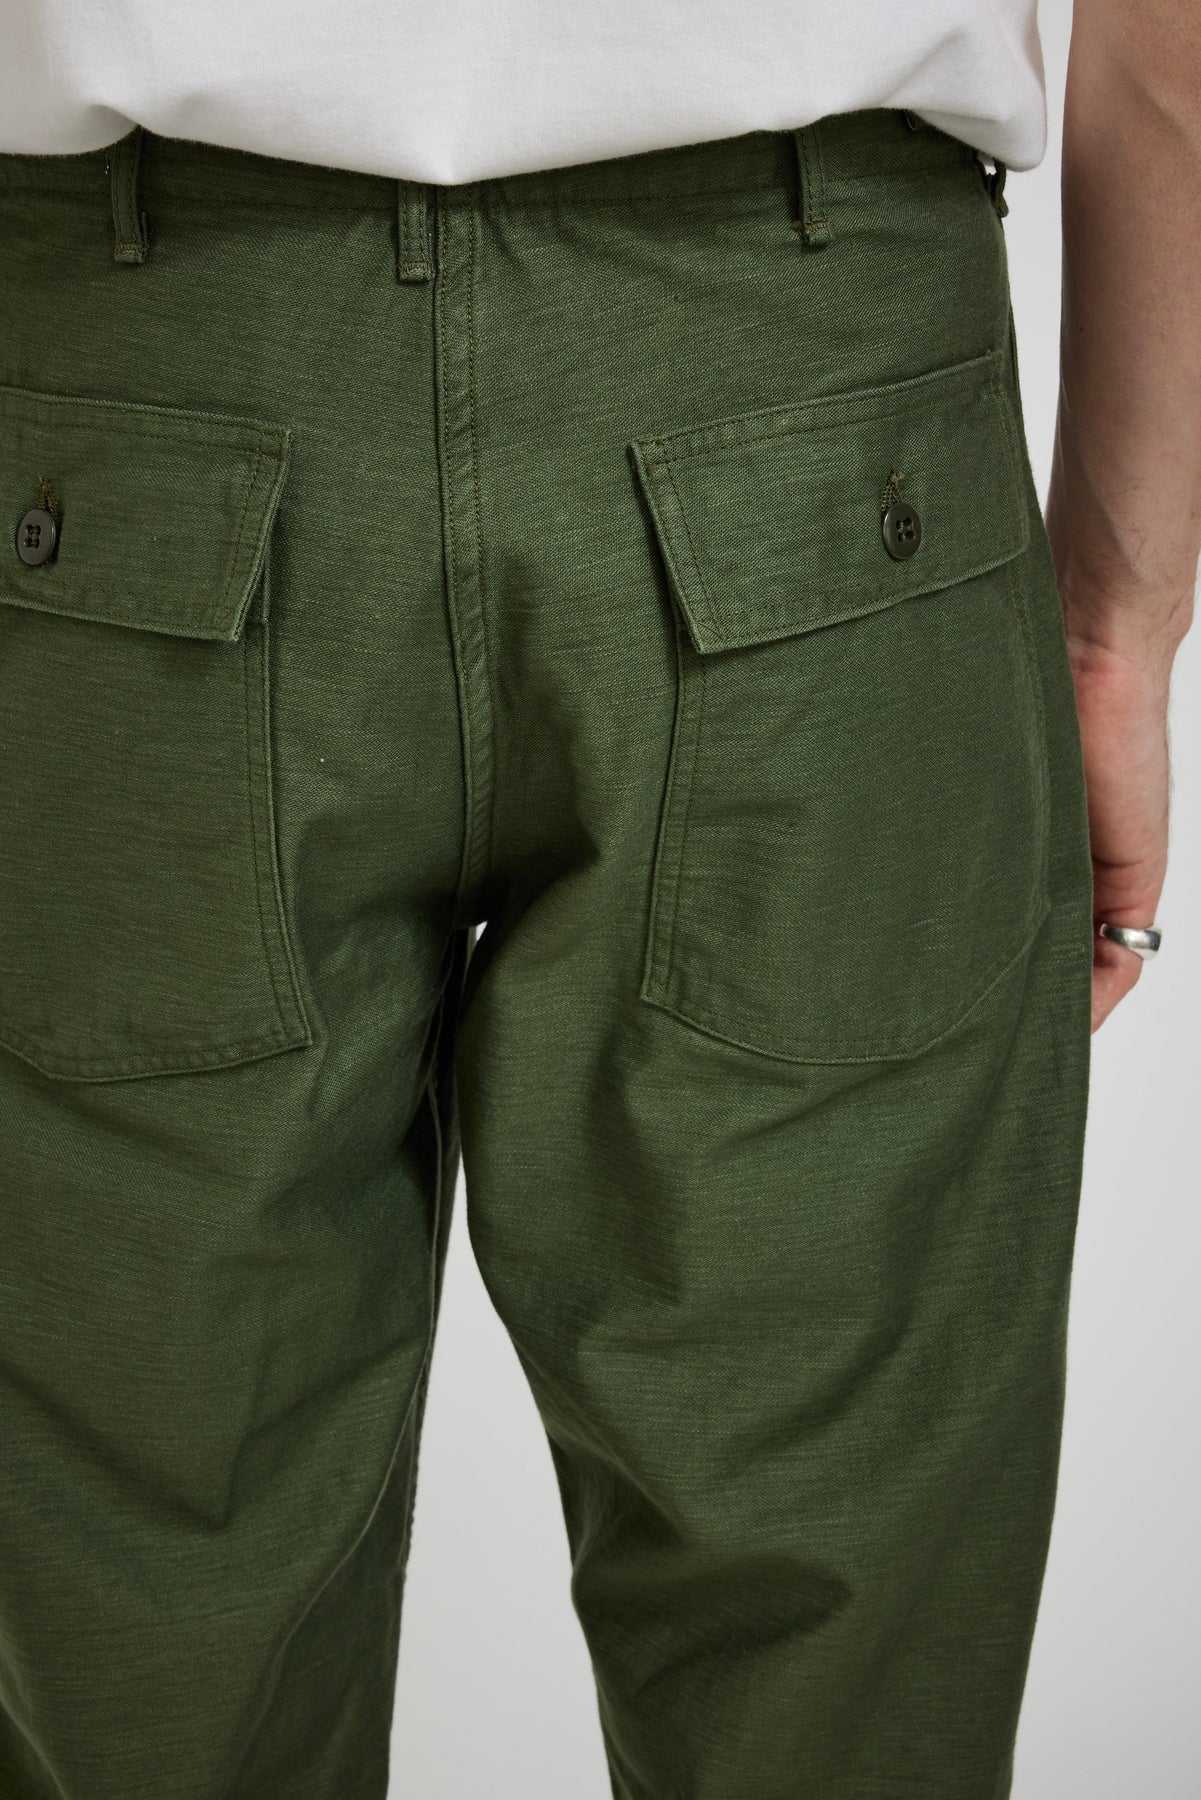 US Army Pants for Men  Poshmark